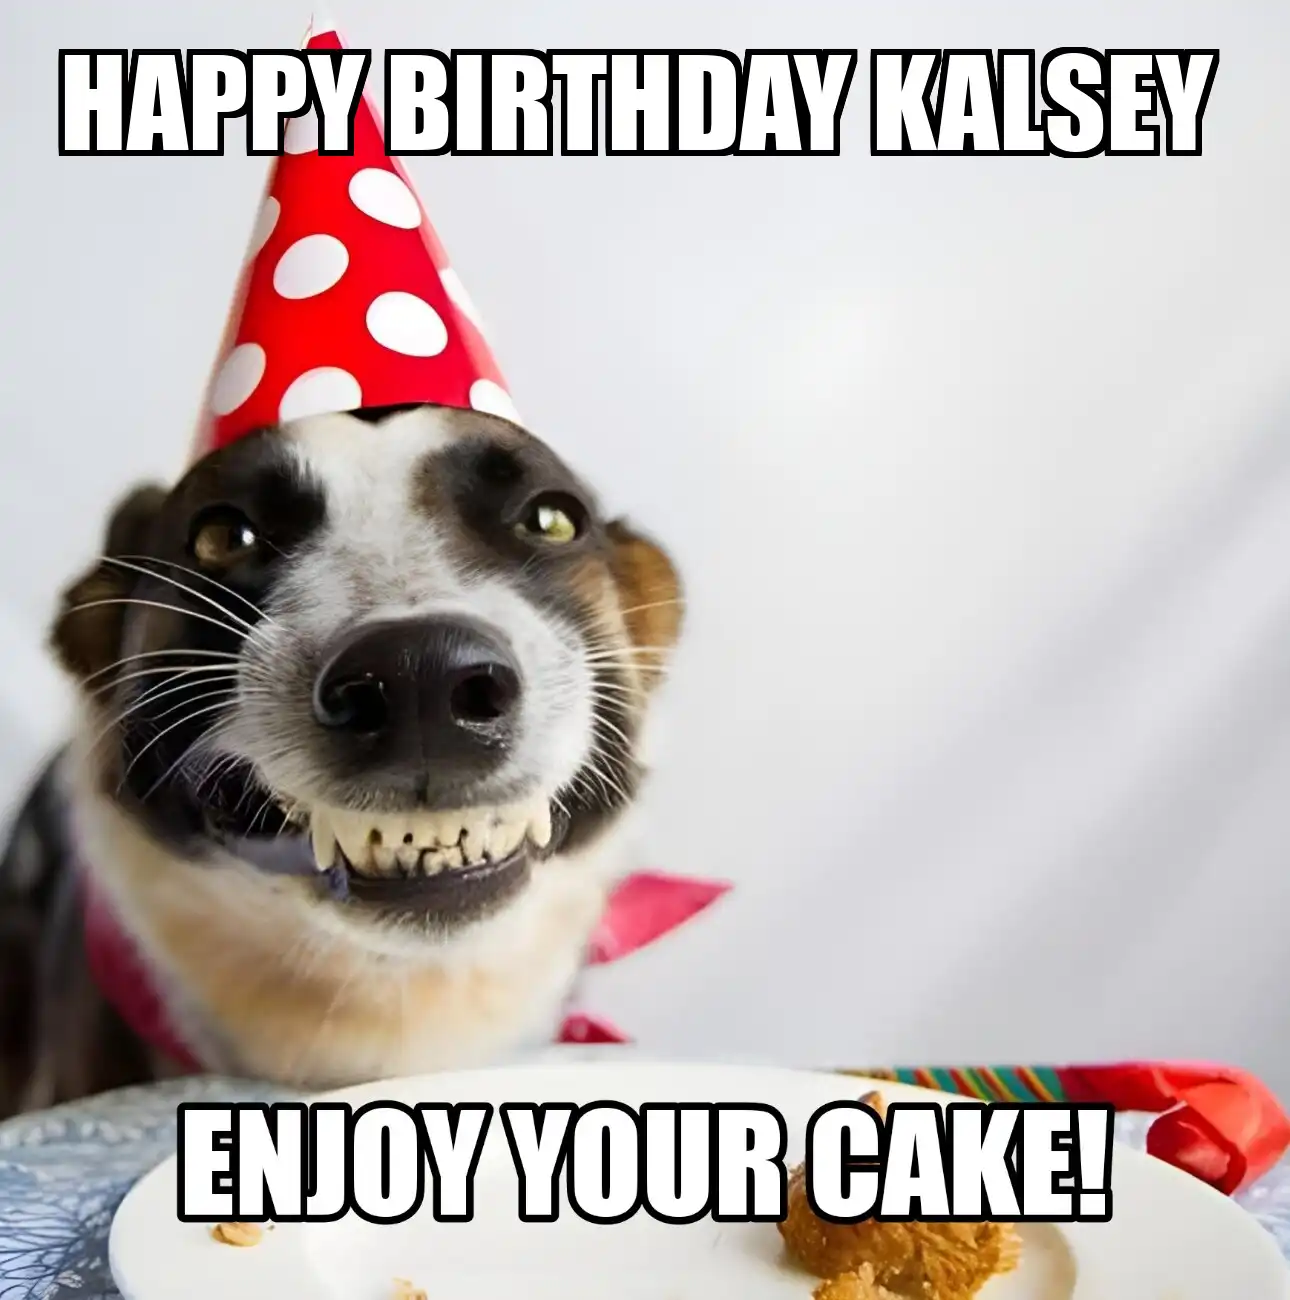 Happy Birthday Kalsey Enjoy Your Cake Dog Meme